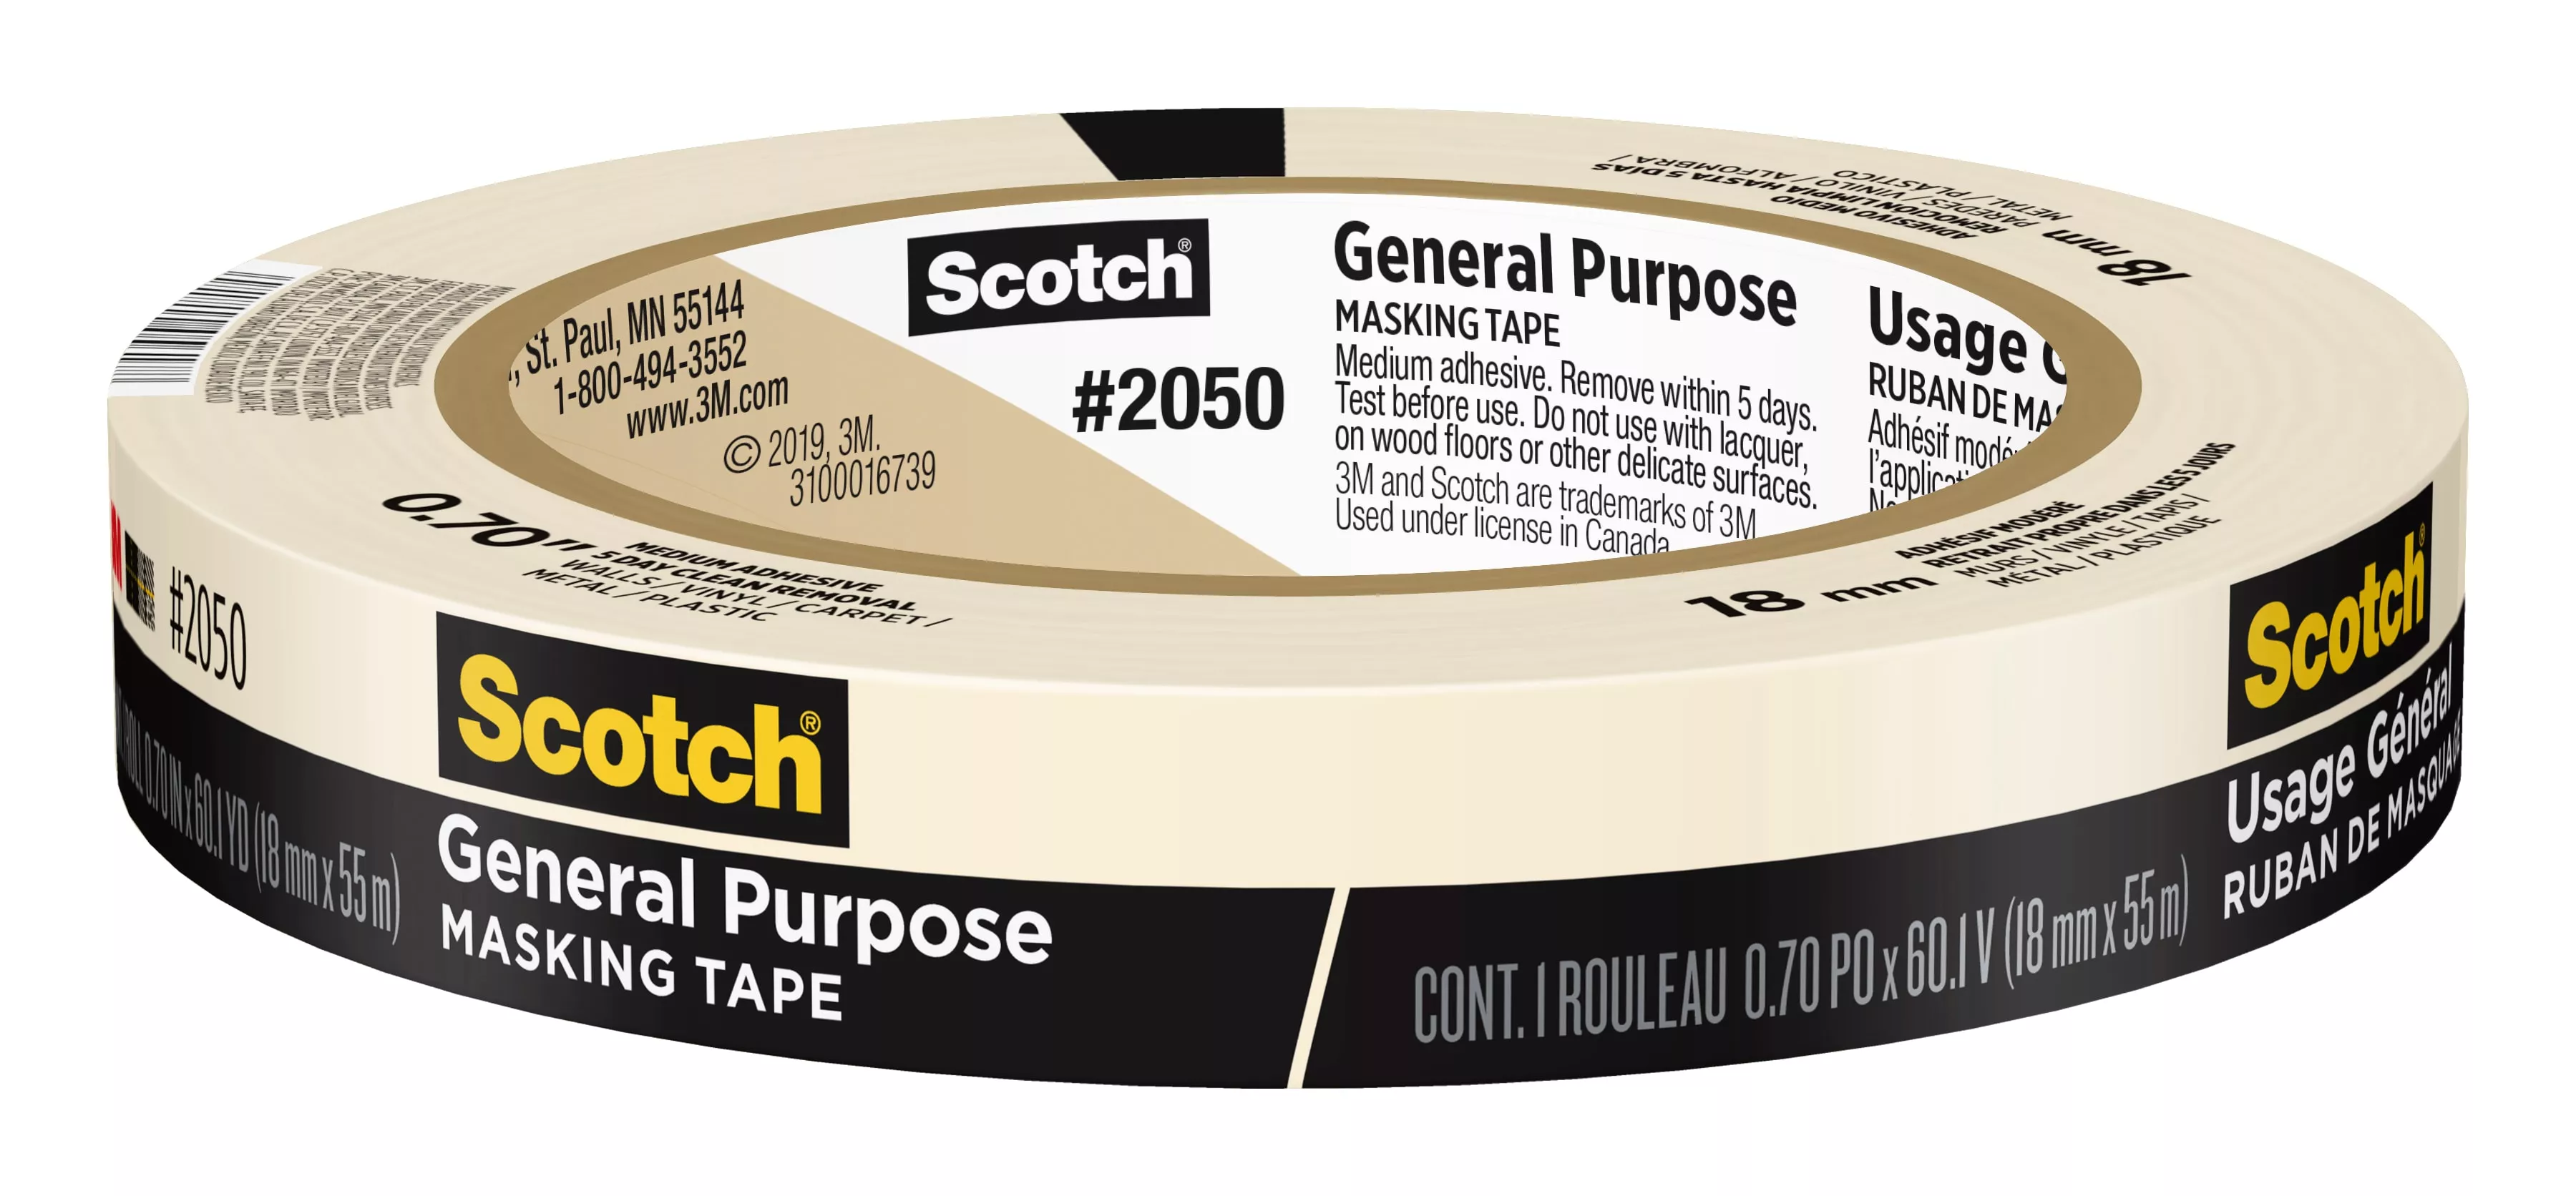 SKU 7100191854 | Scotch® General Purpose Masking Tape 2050-18AP